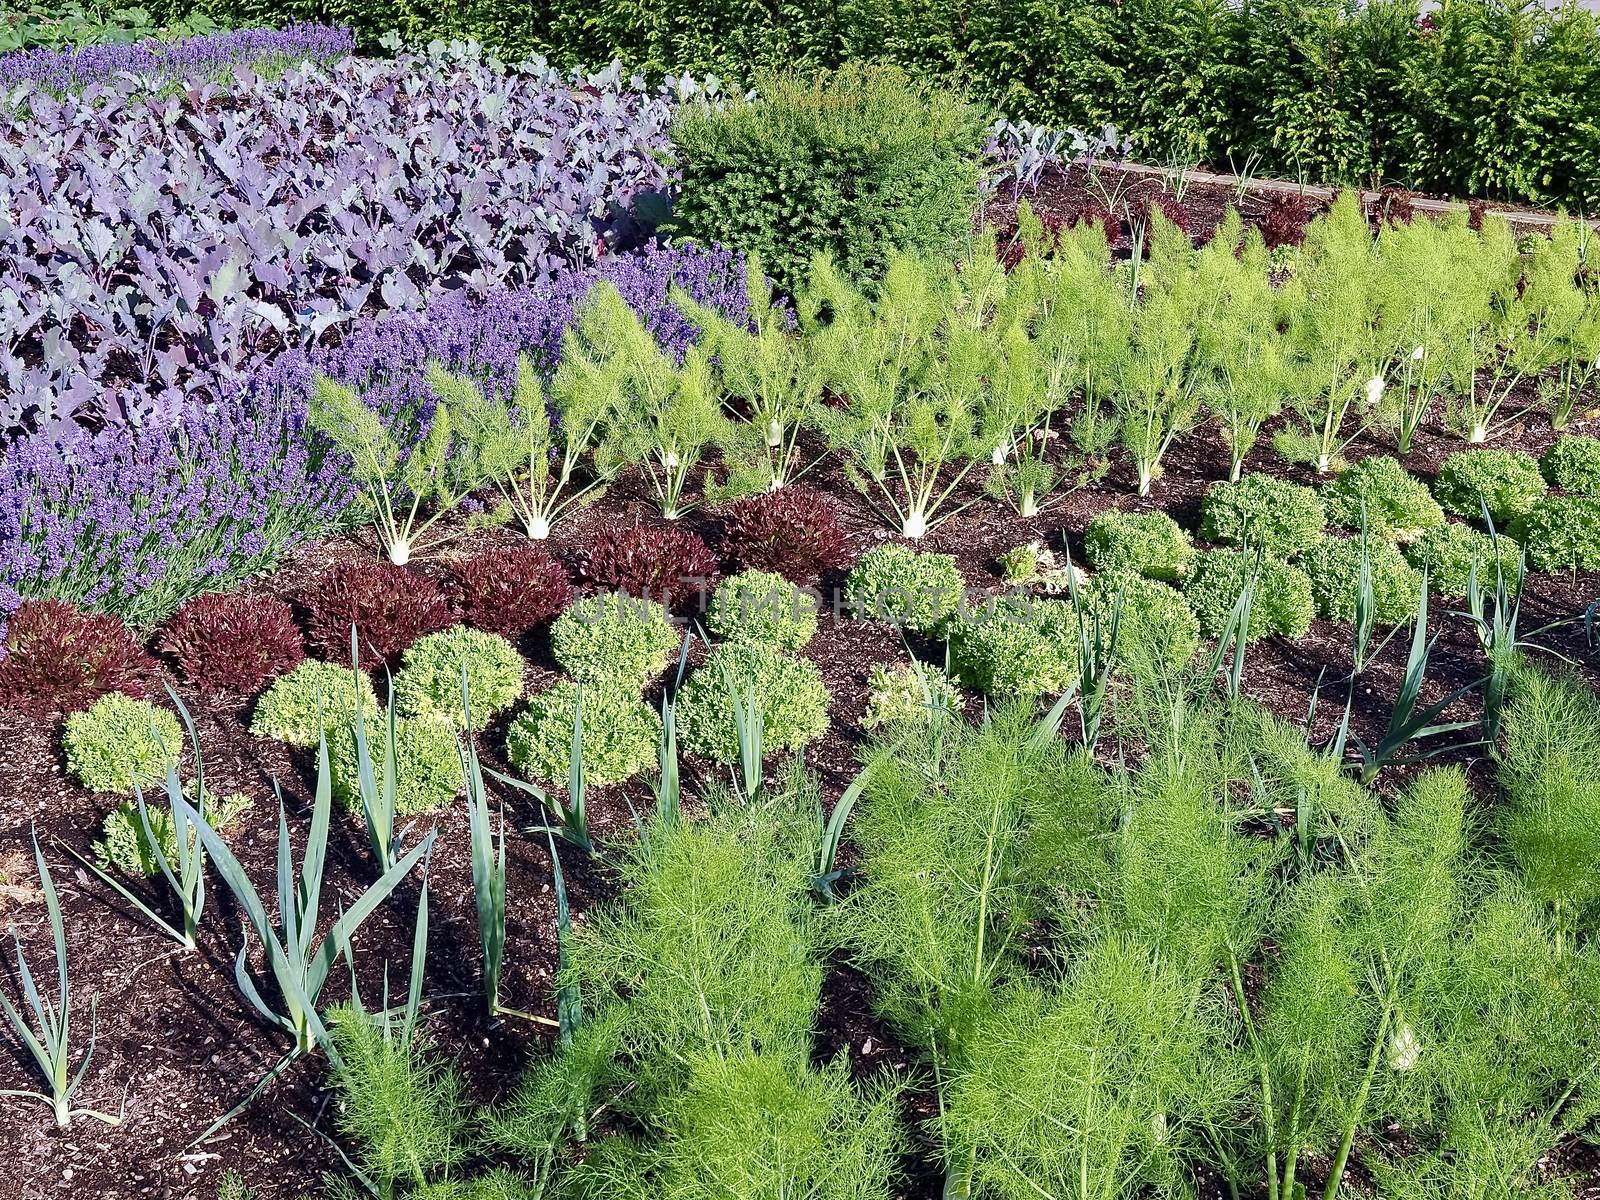 Vegetable garden with kohlrabi plants and lavender flowers